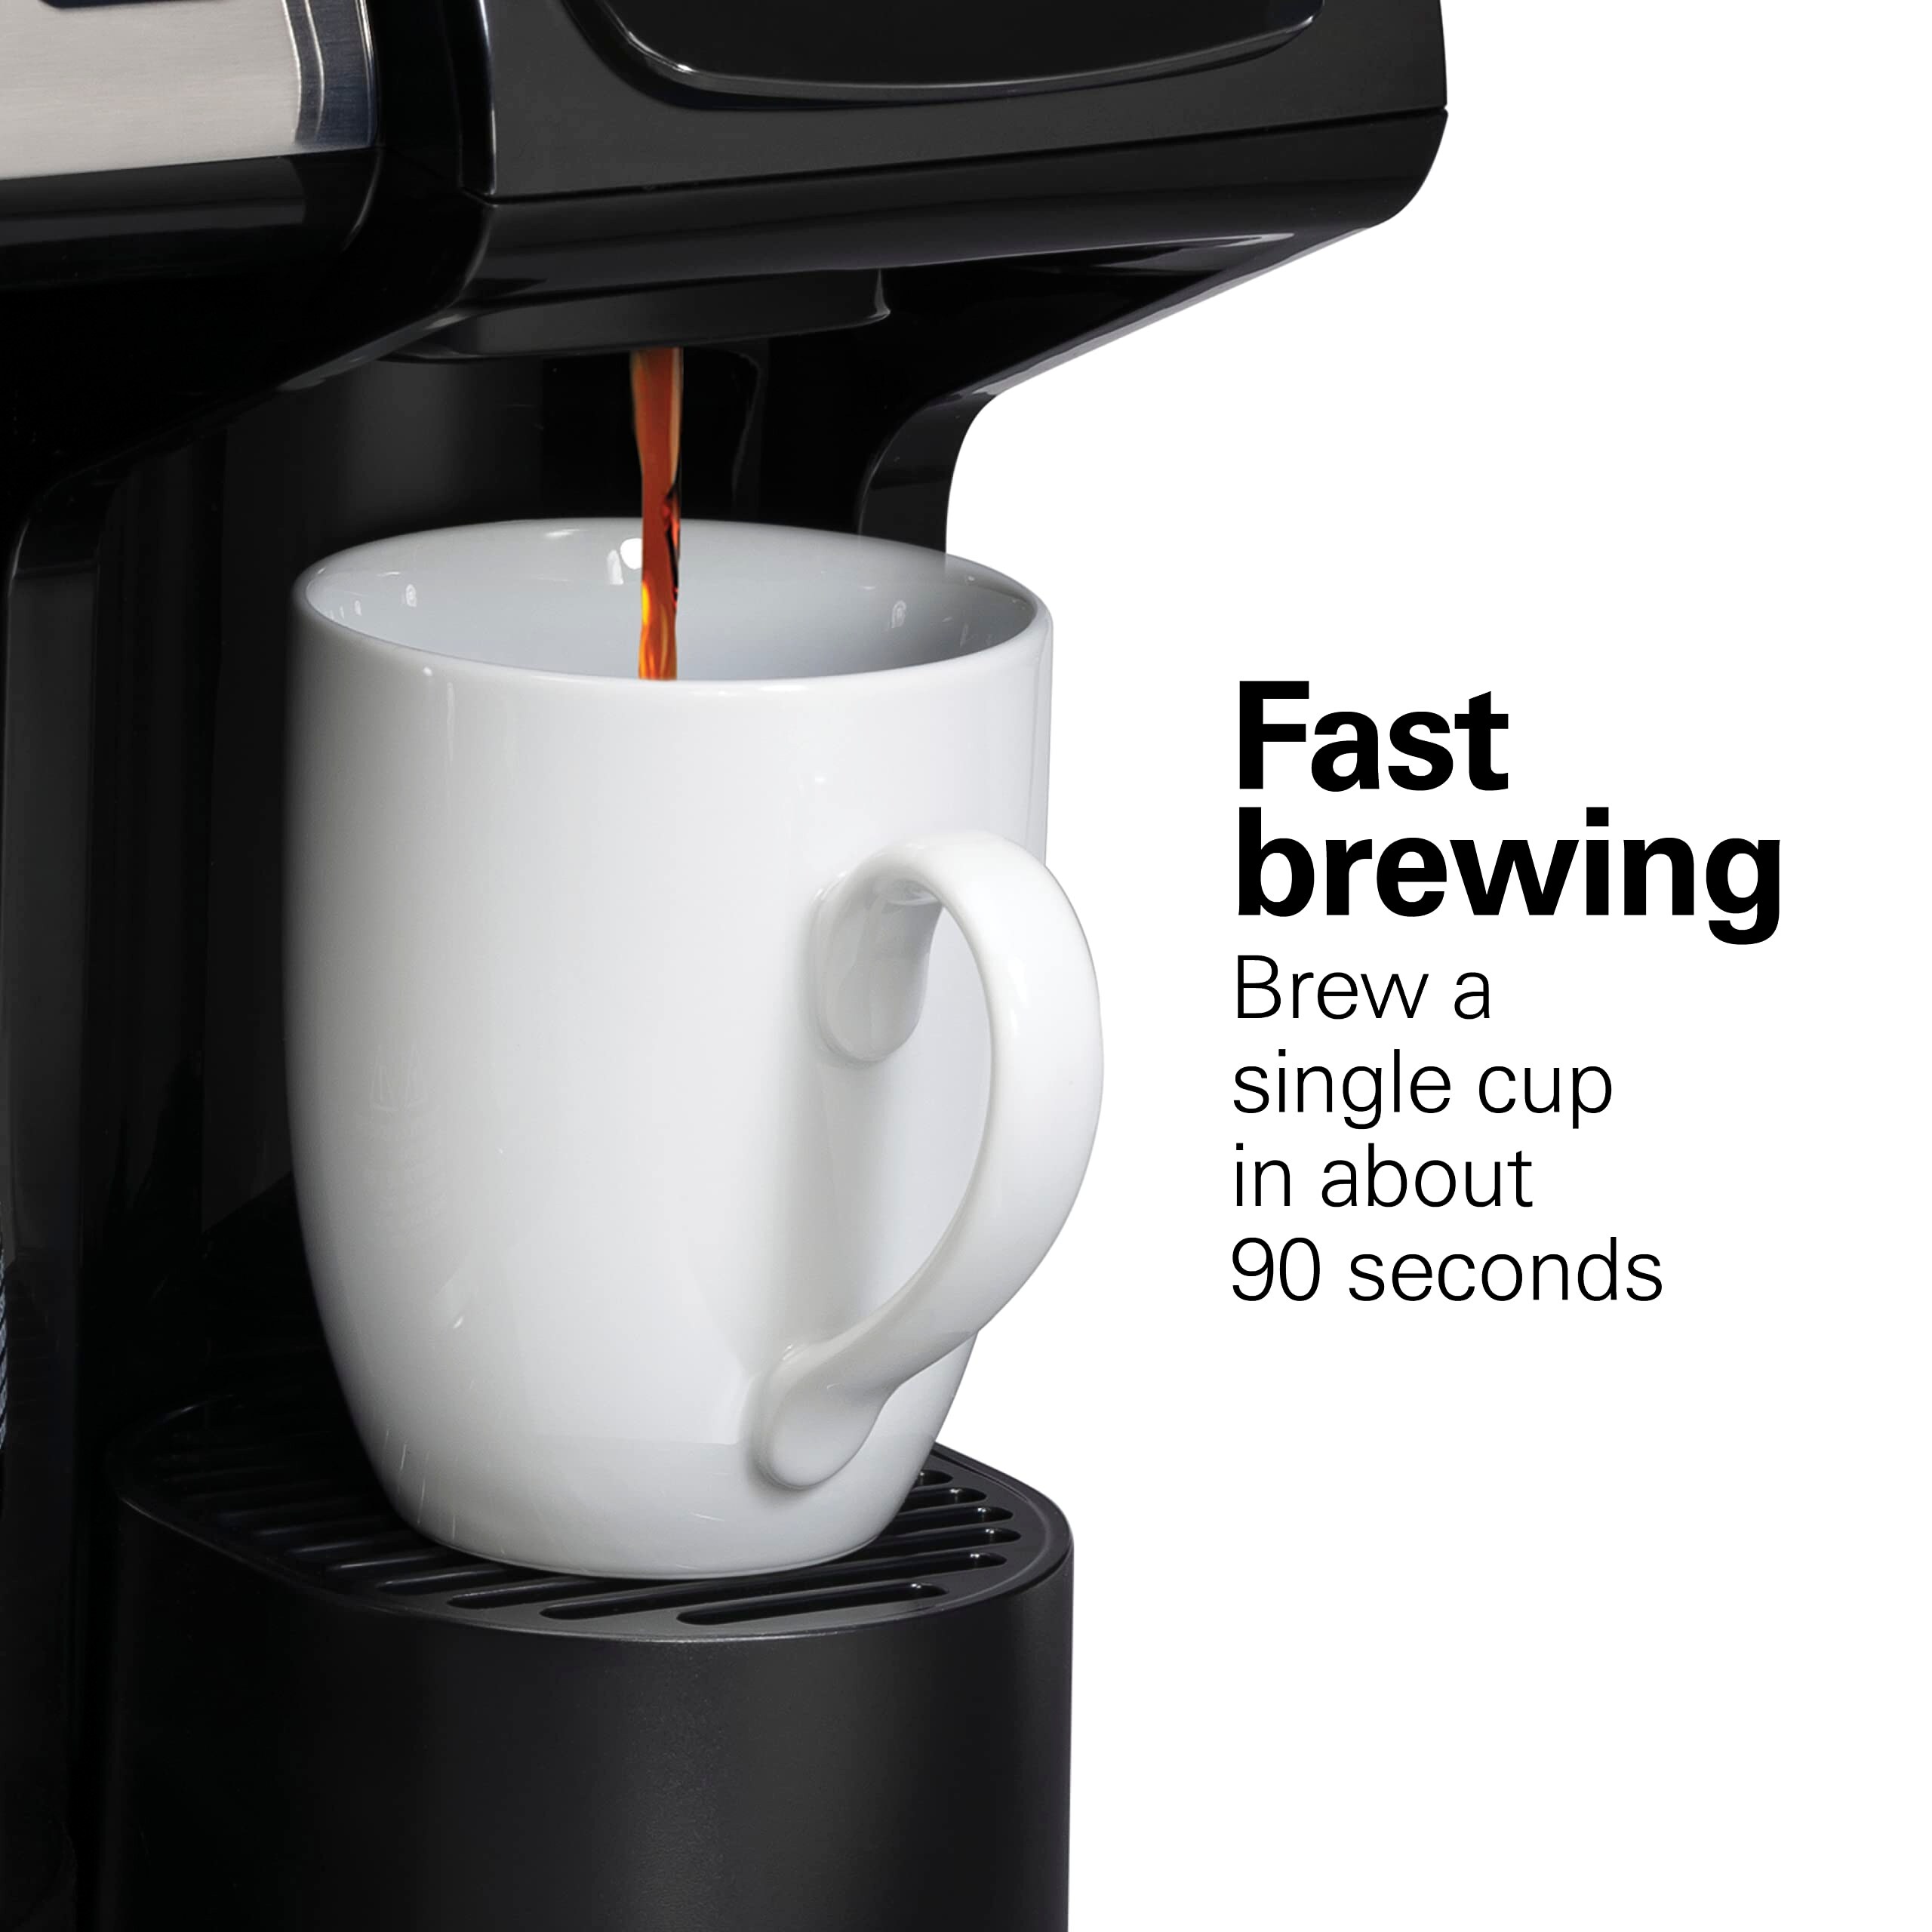 Ninja Pods & Grounds Single-Serve Coffee Maker, K-Cup Pod Compatible, 56  oz.